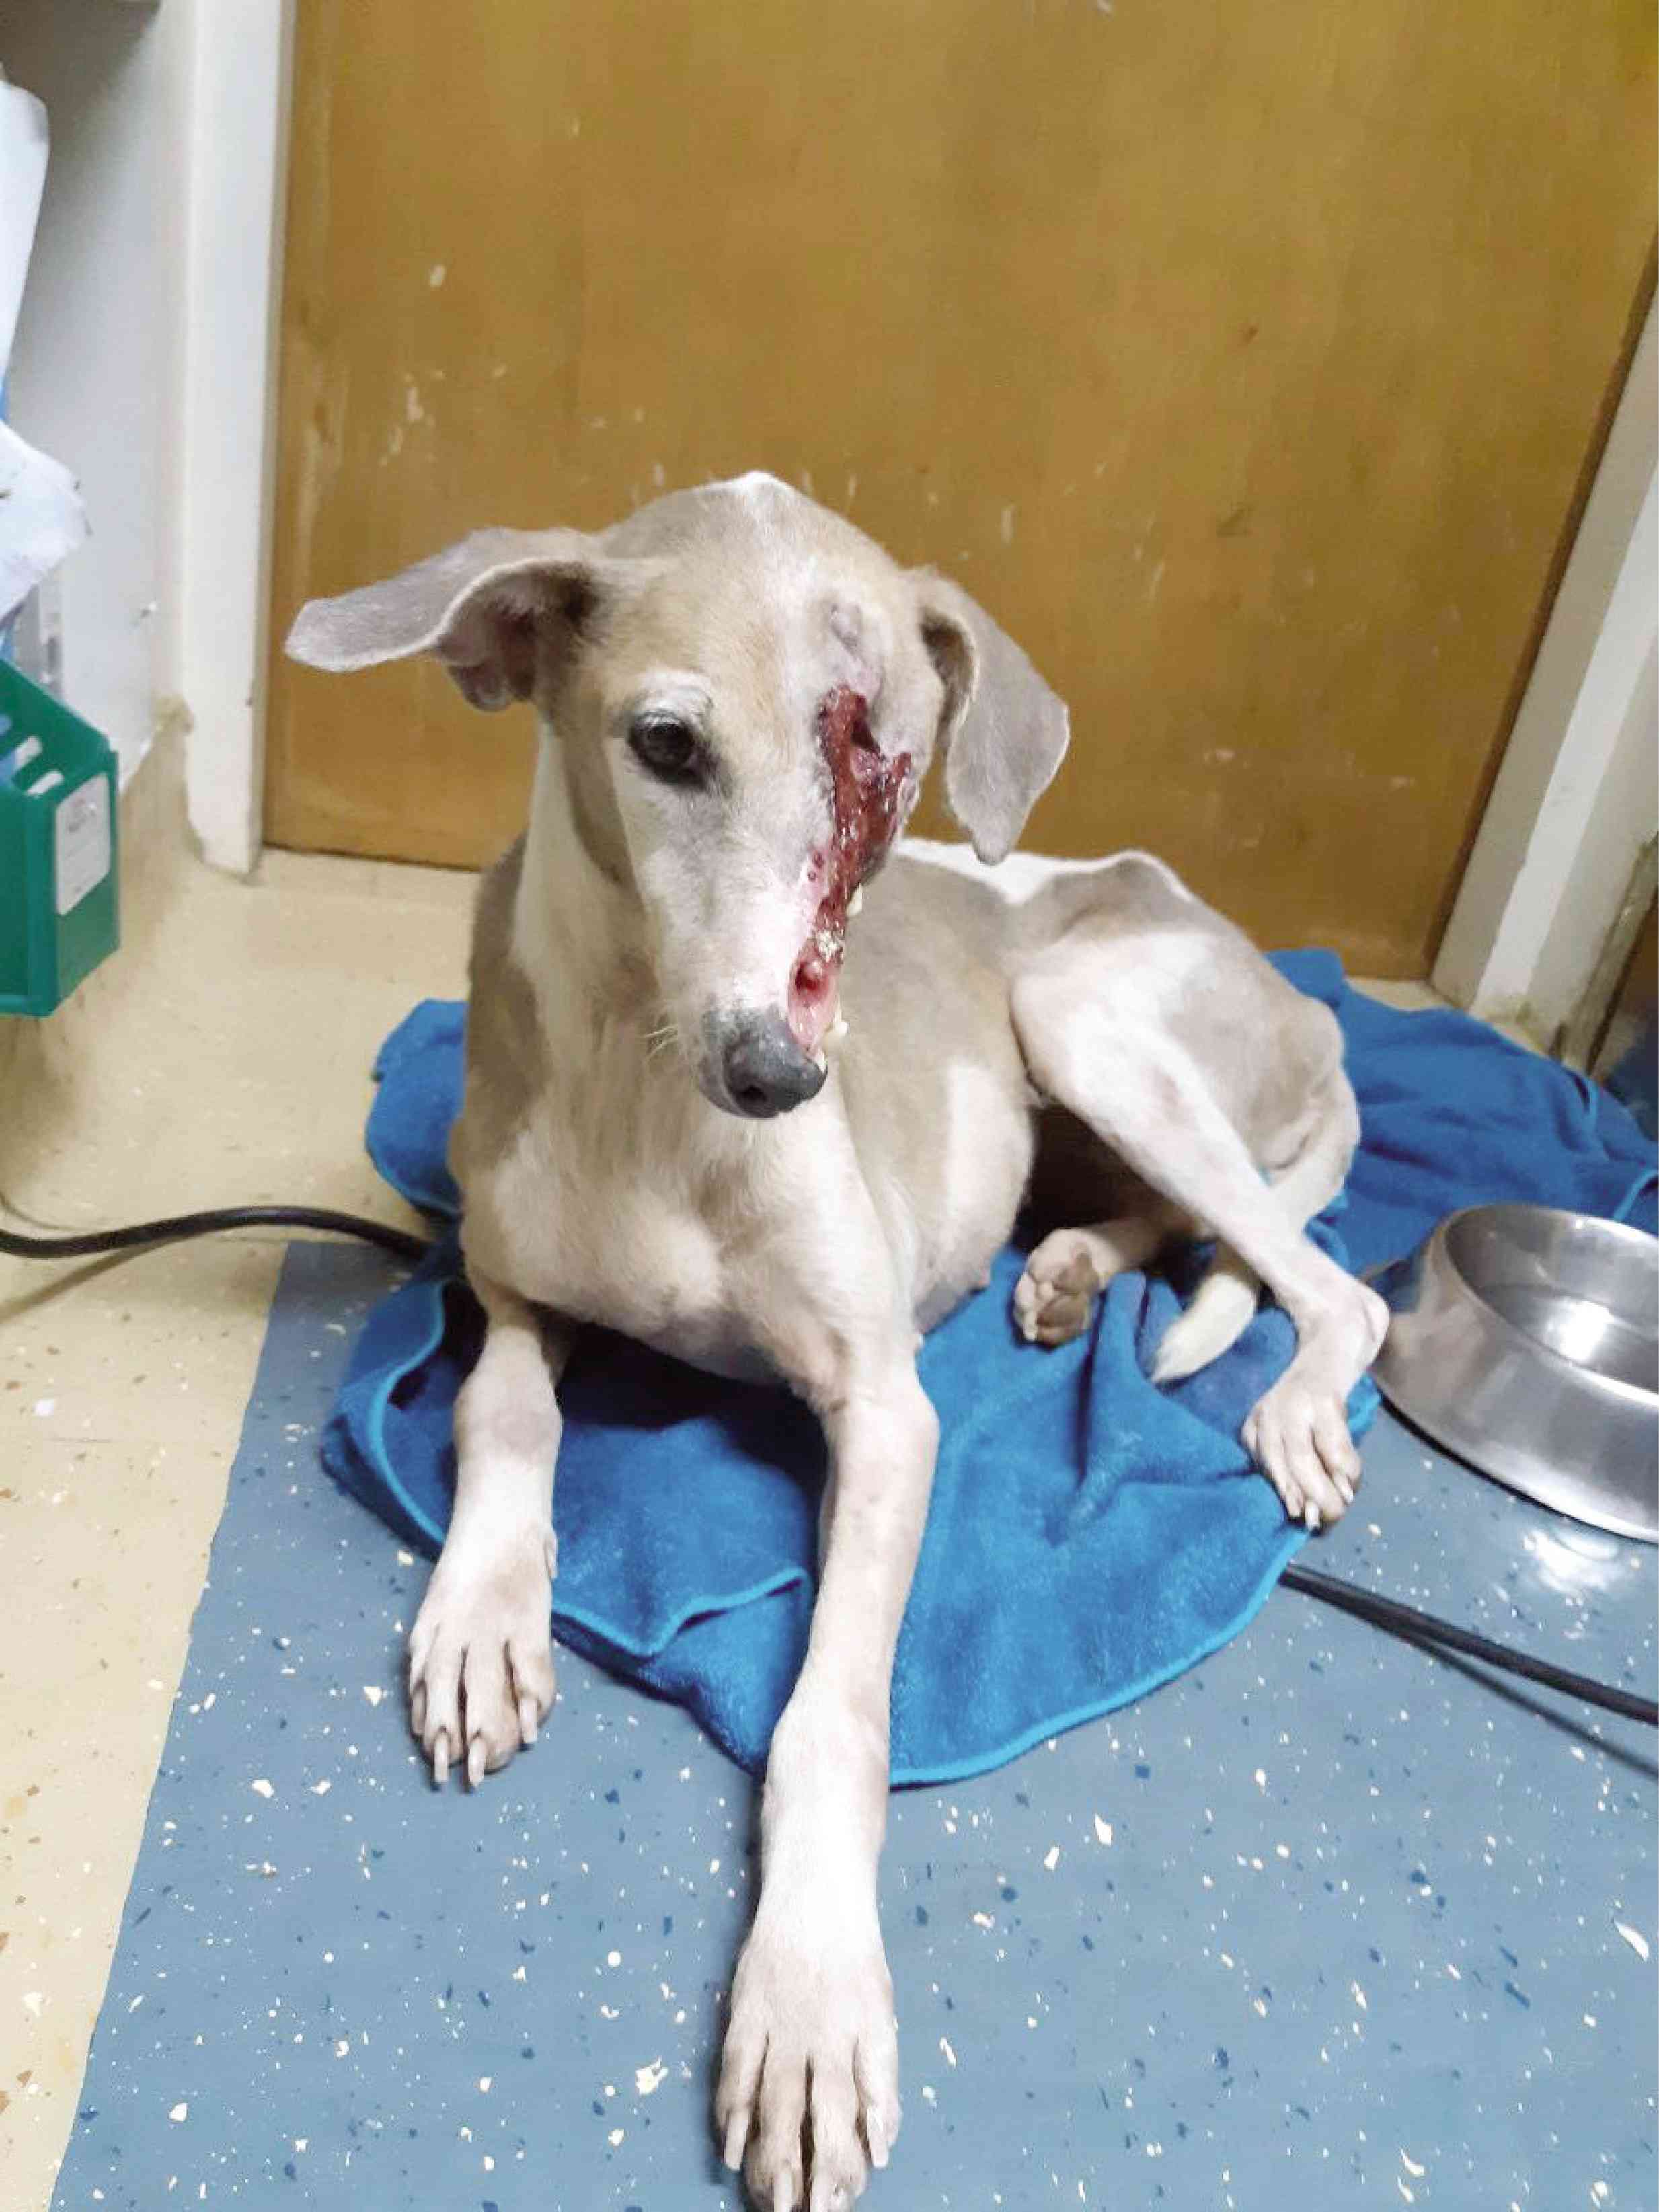 Disfigured dog in Boracay saved by animal advocates